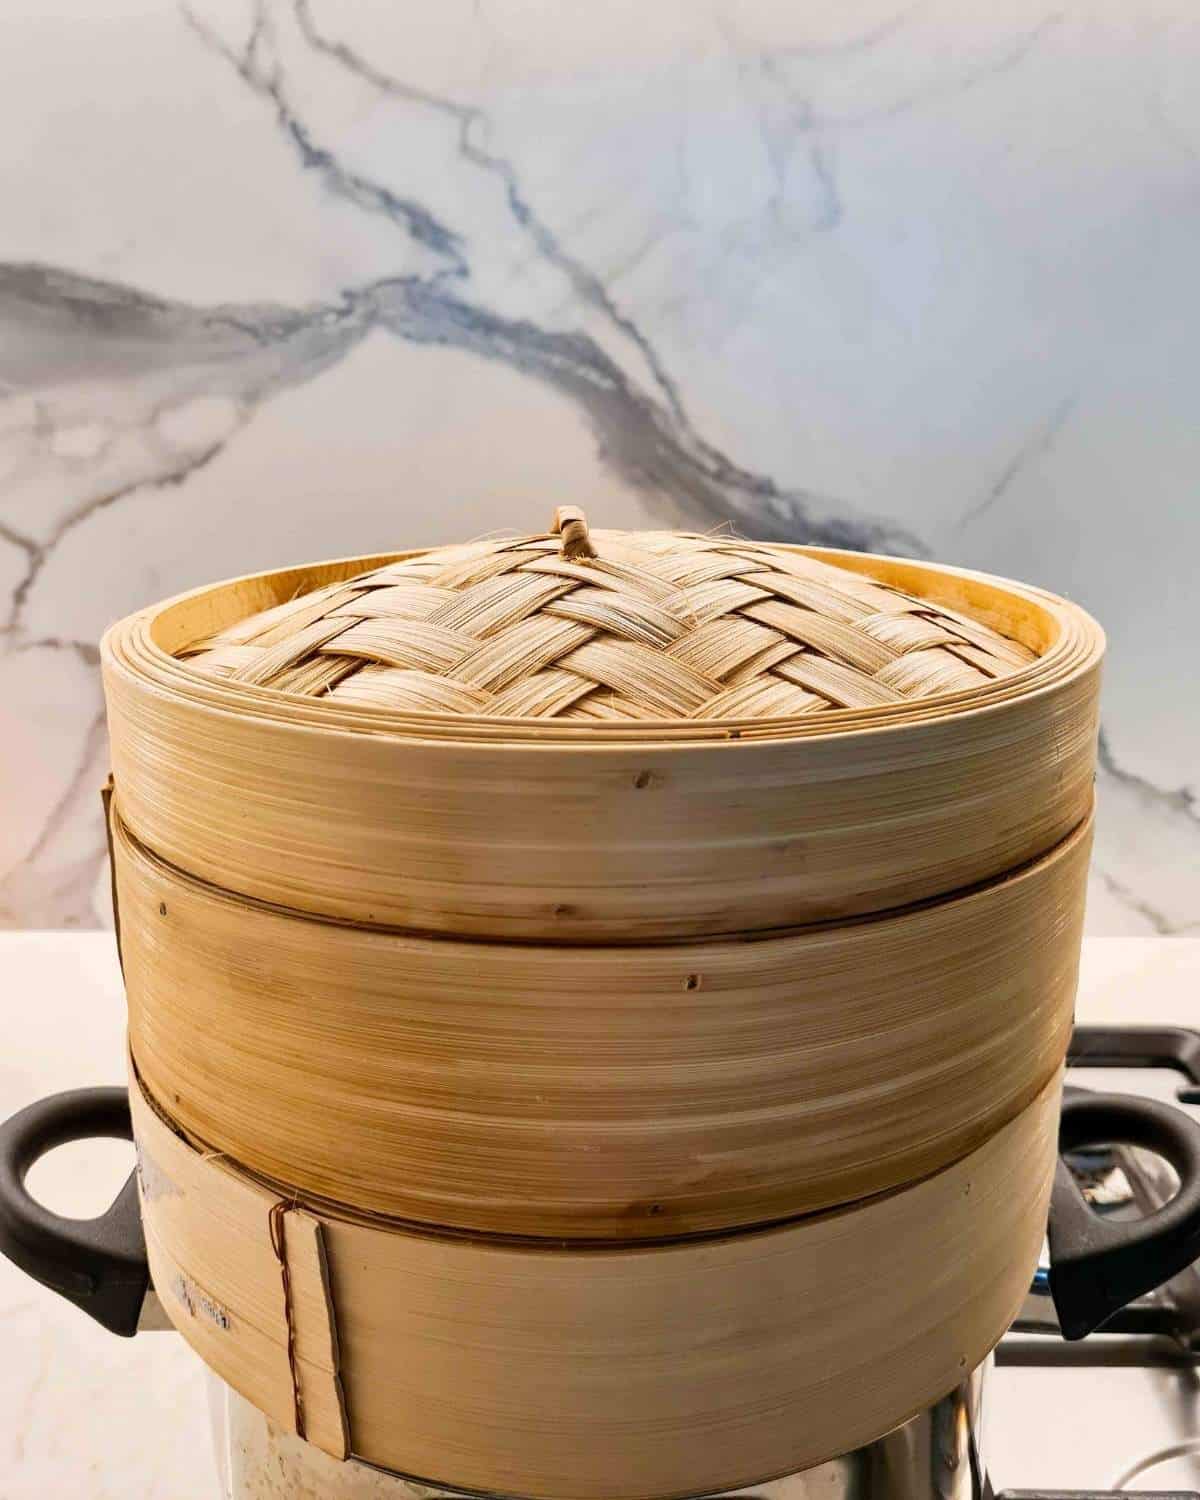 Dumplings being steamed inside bamboo steamer baskets